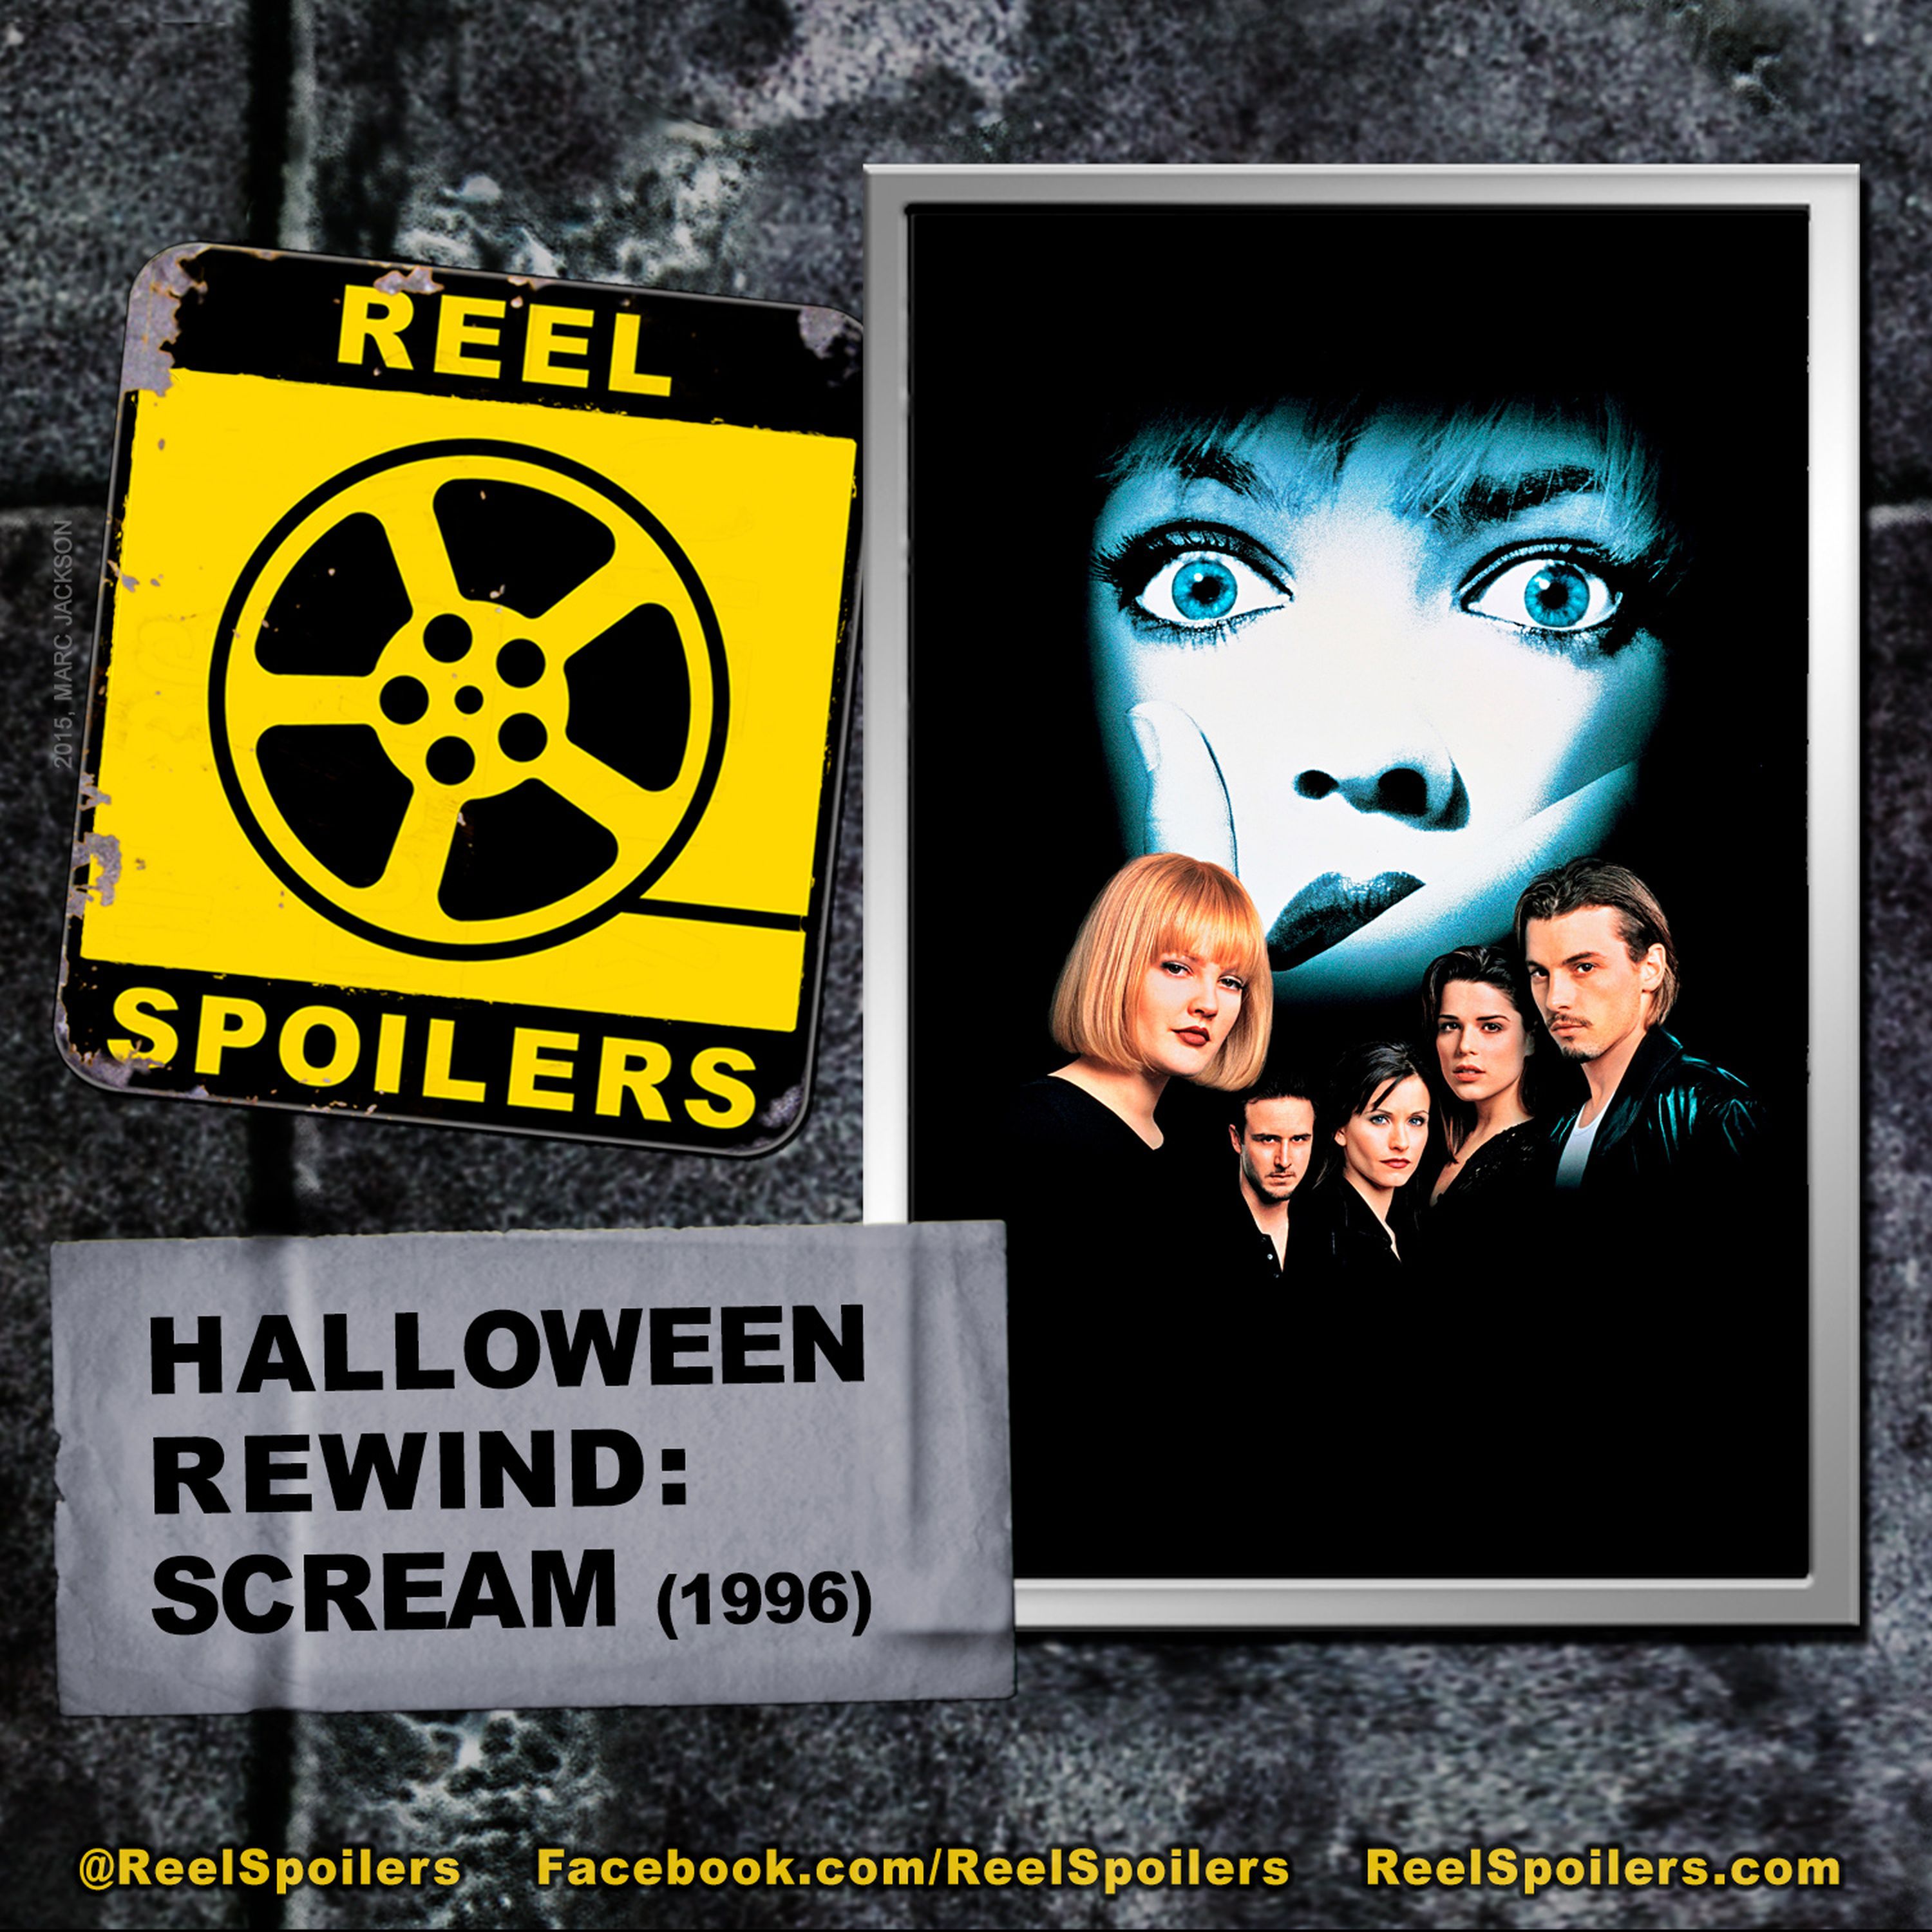 Halloween Rewind: SCREAM (1996) Image